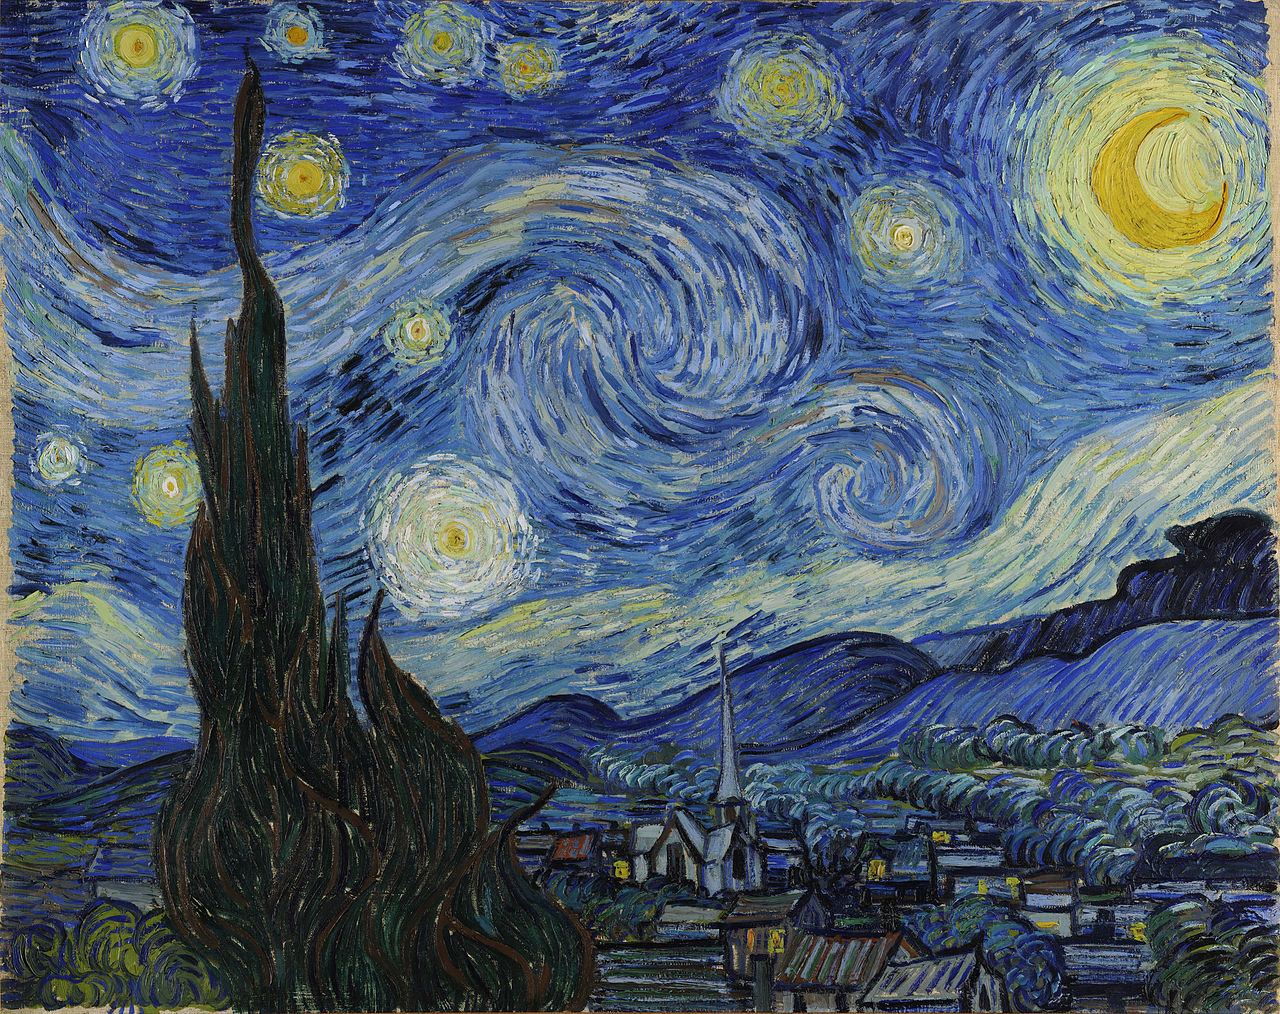 Starry Night by Vincent van Gogh - 1889 - 73,7  × 92,1 cm Museum of Modern Art